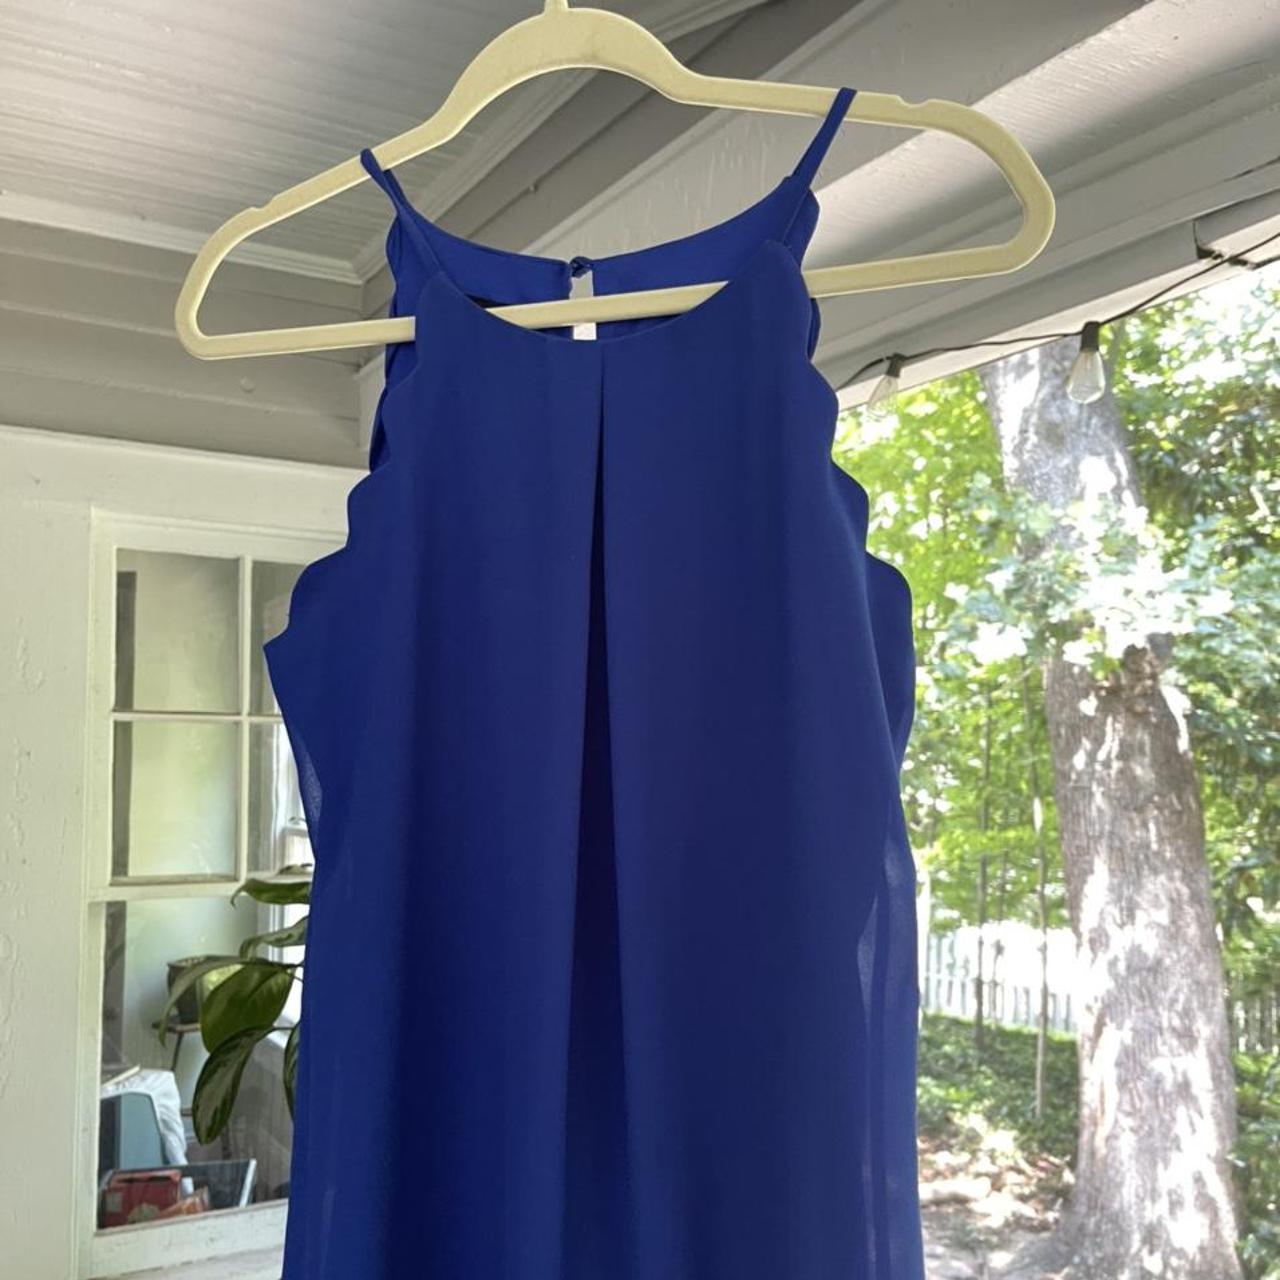 17London Women's Navy and Blue Dress